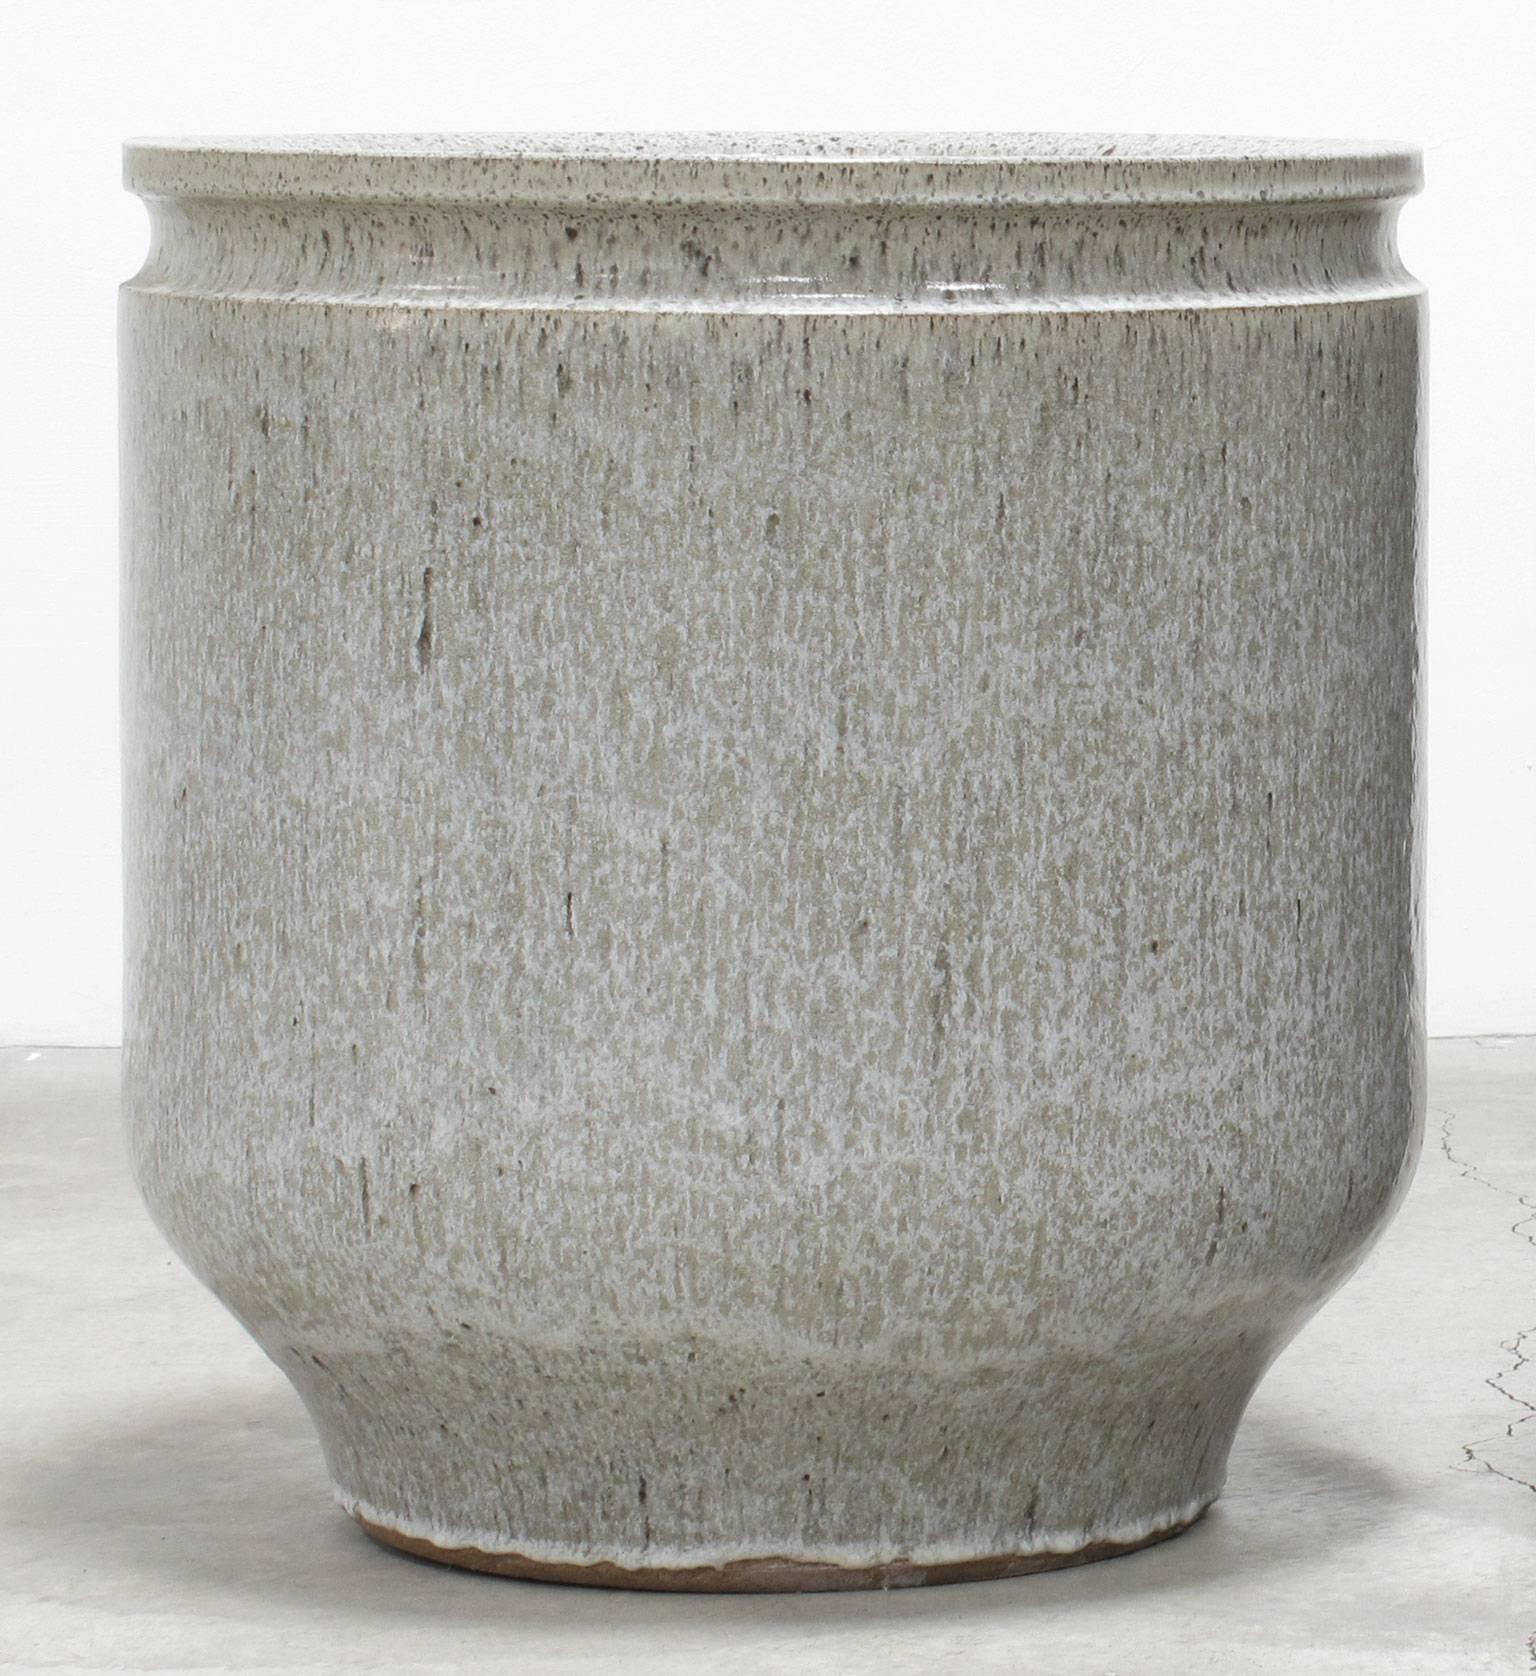 David Cressey and Robert Maxwell ceramic planter, 1970s, stoneware, glazed grey, 19.5 high x 18 diameter inches, earthgender ceramics, Los Angeles, California.